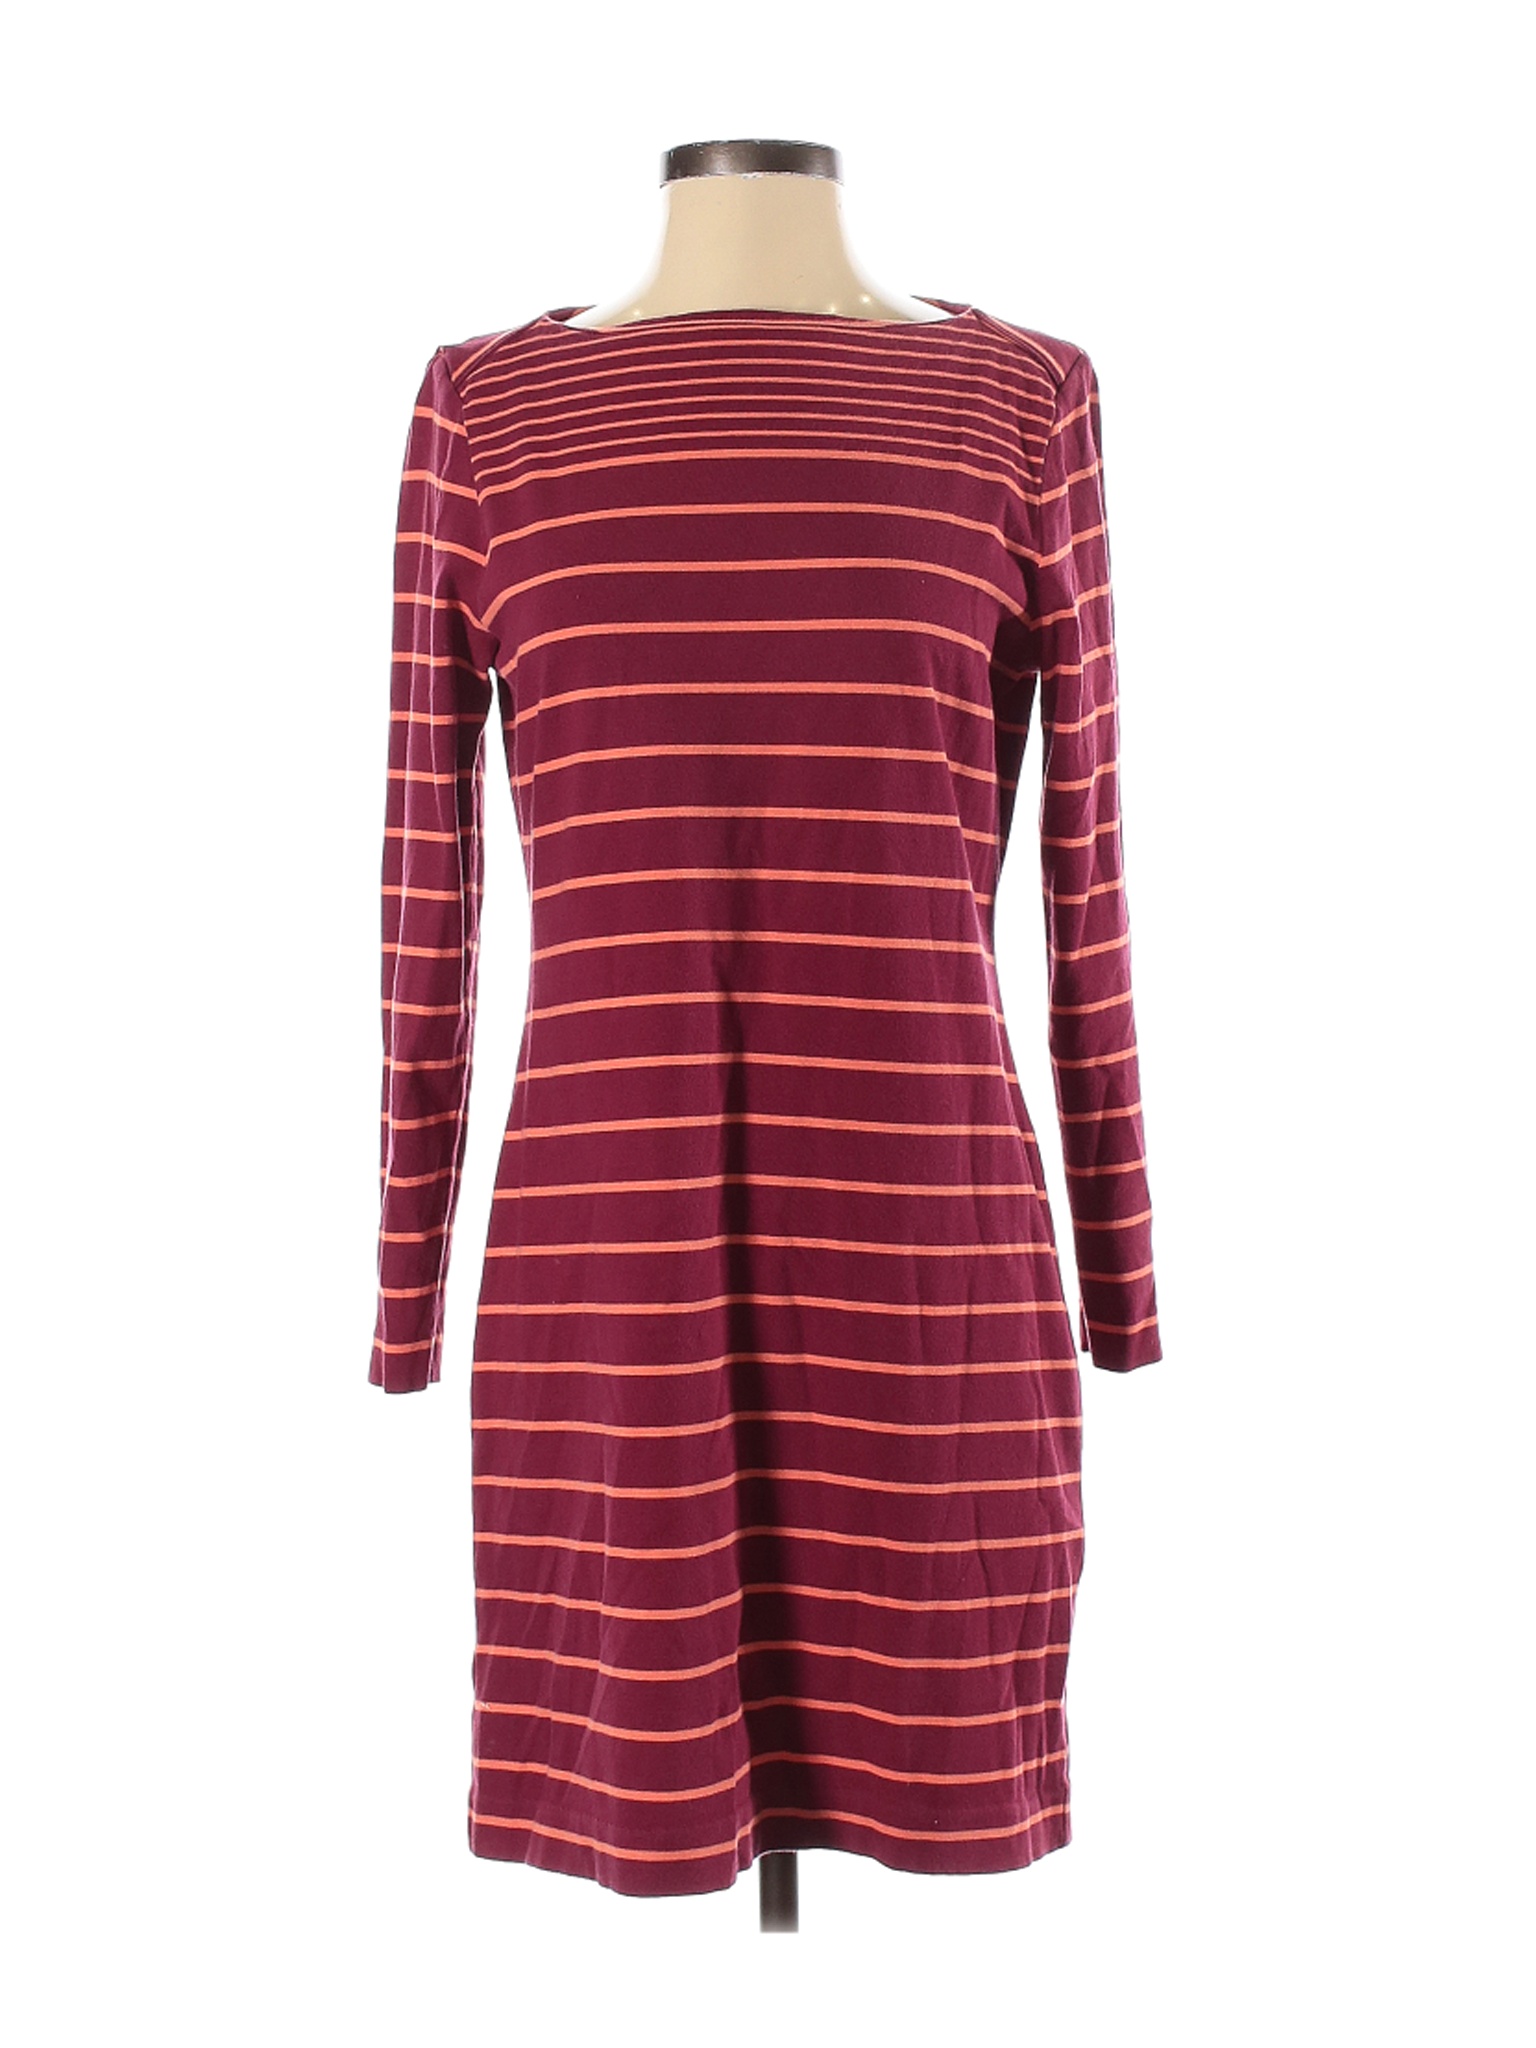 L.L.Bean Signature Women Red Casual Dress 4 | eBay